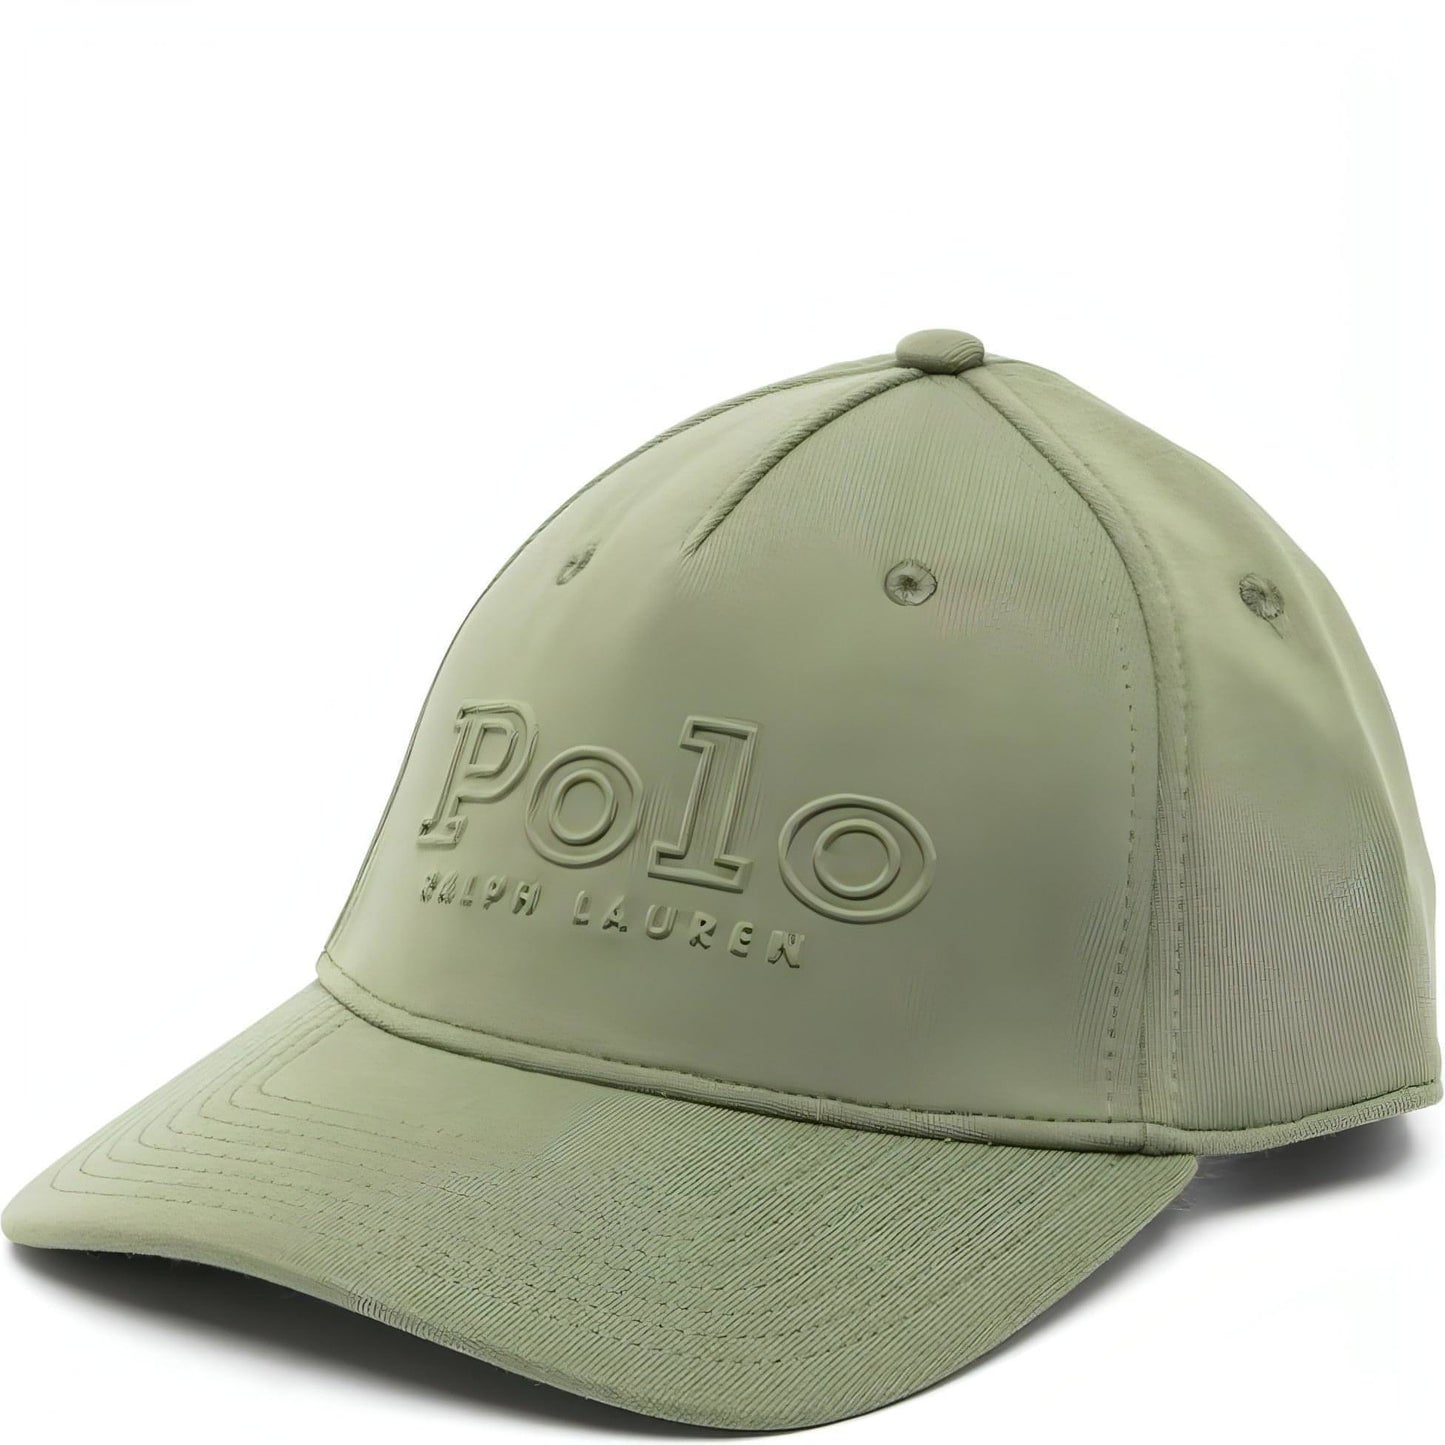 POLO RALPH LAUREN vyriška žalia kepurė su snapeliu Modern cap